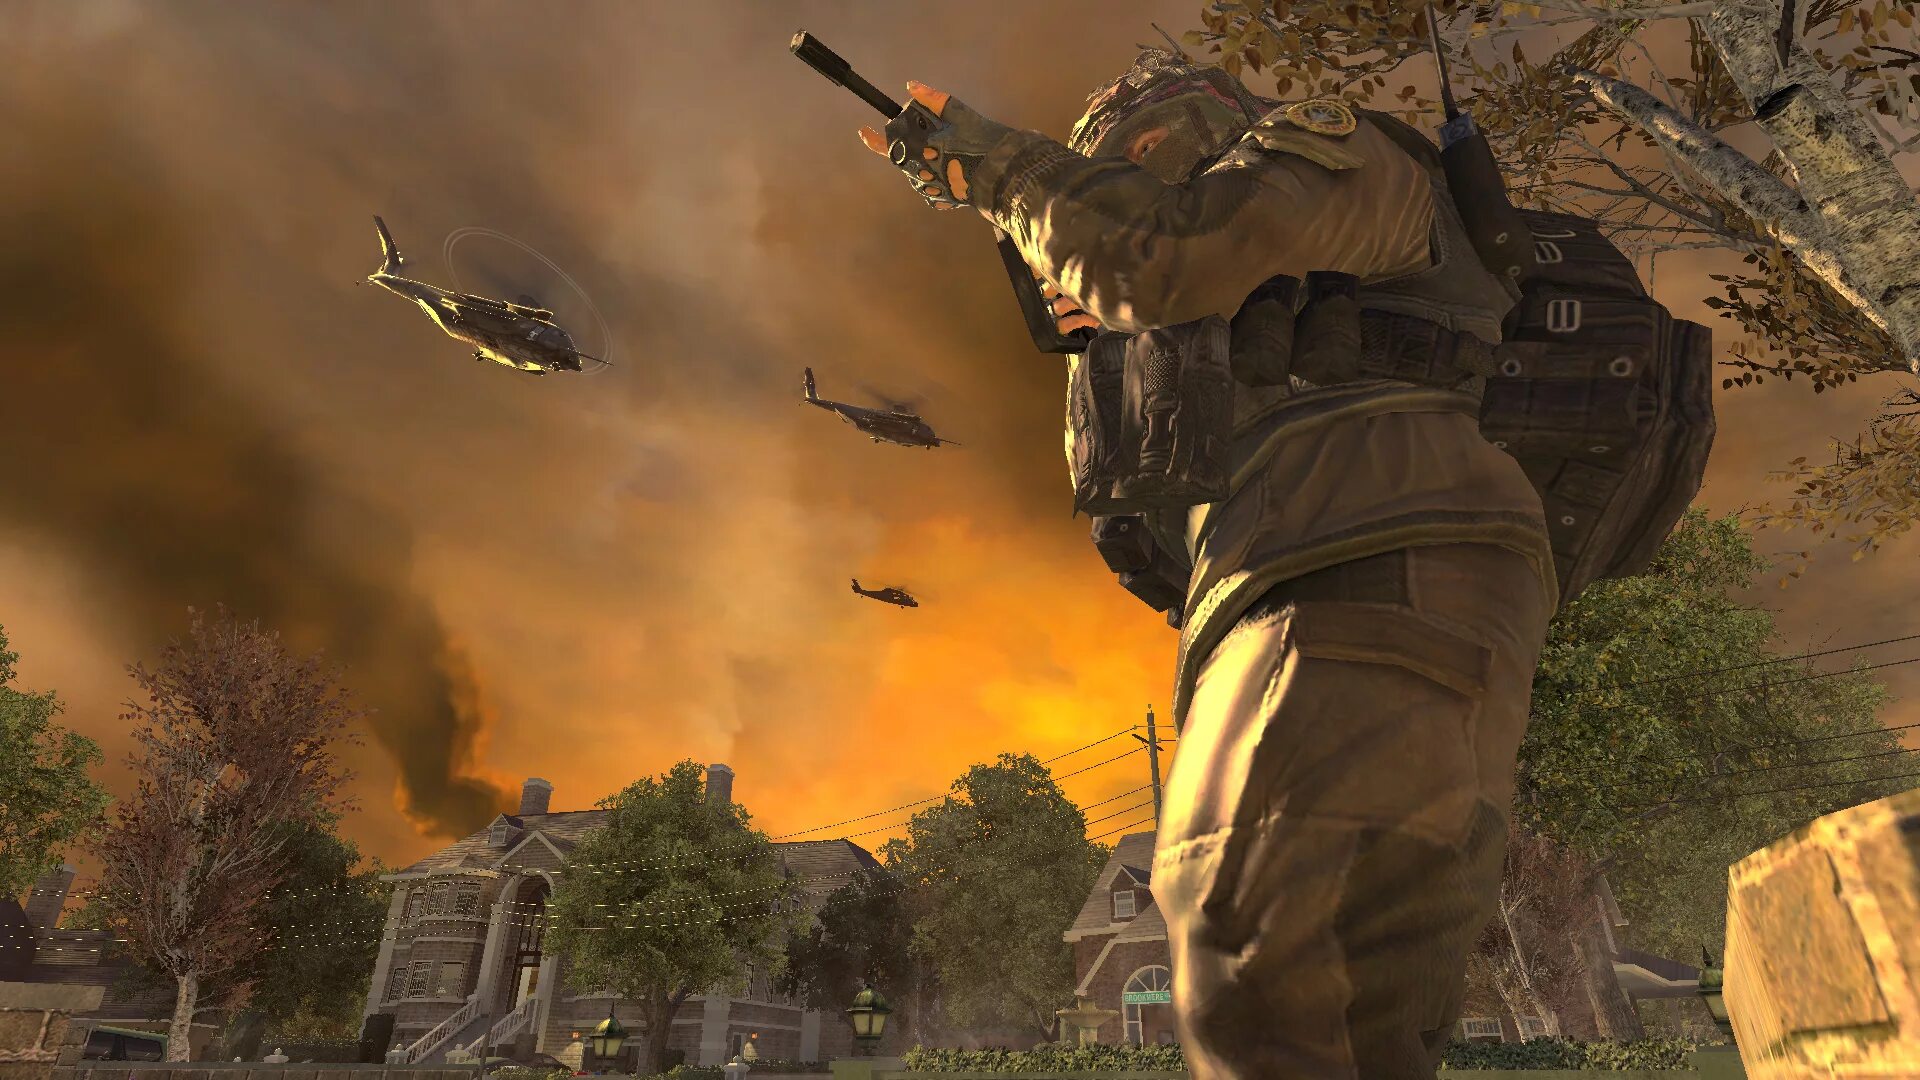 Modern Warfare 2. Mw2 Remastered Airborne. Call of Duty: Modern Warfare 2. Cod mw2.